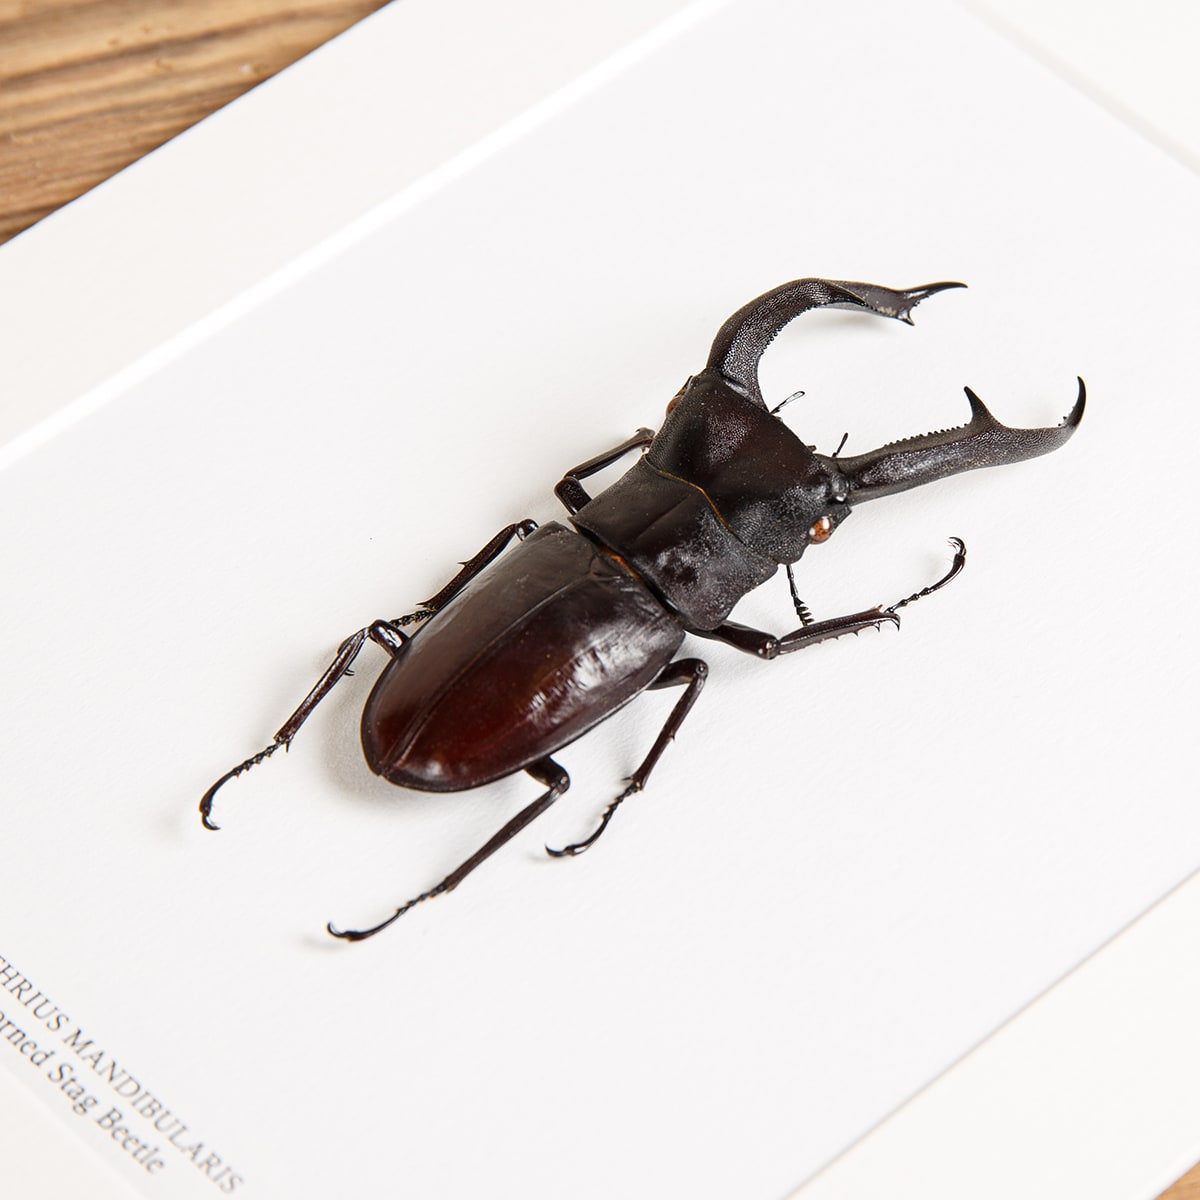 Fork-horned Stag Beetle in Box Frame (Hexarthrius mandibularis)